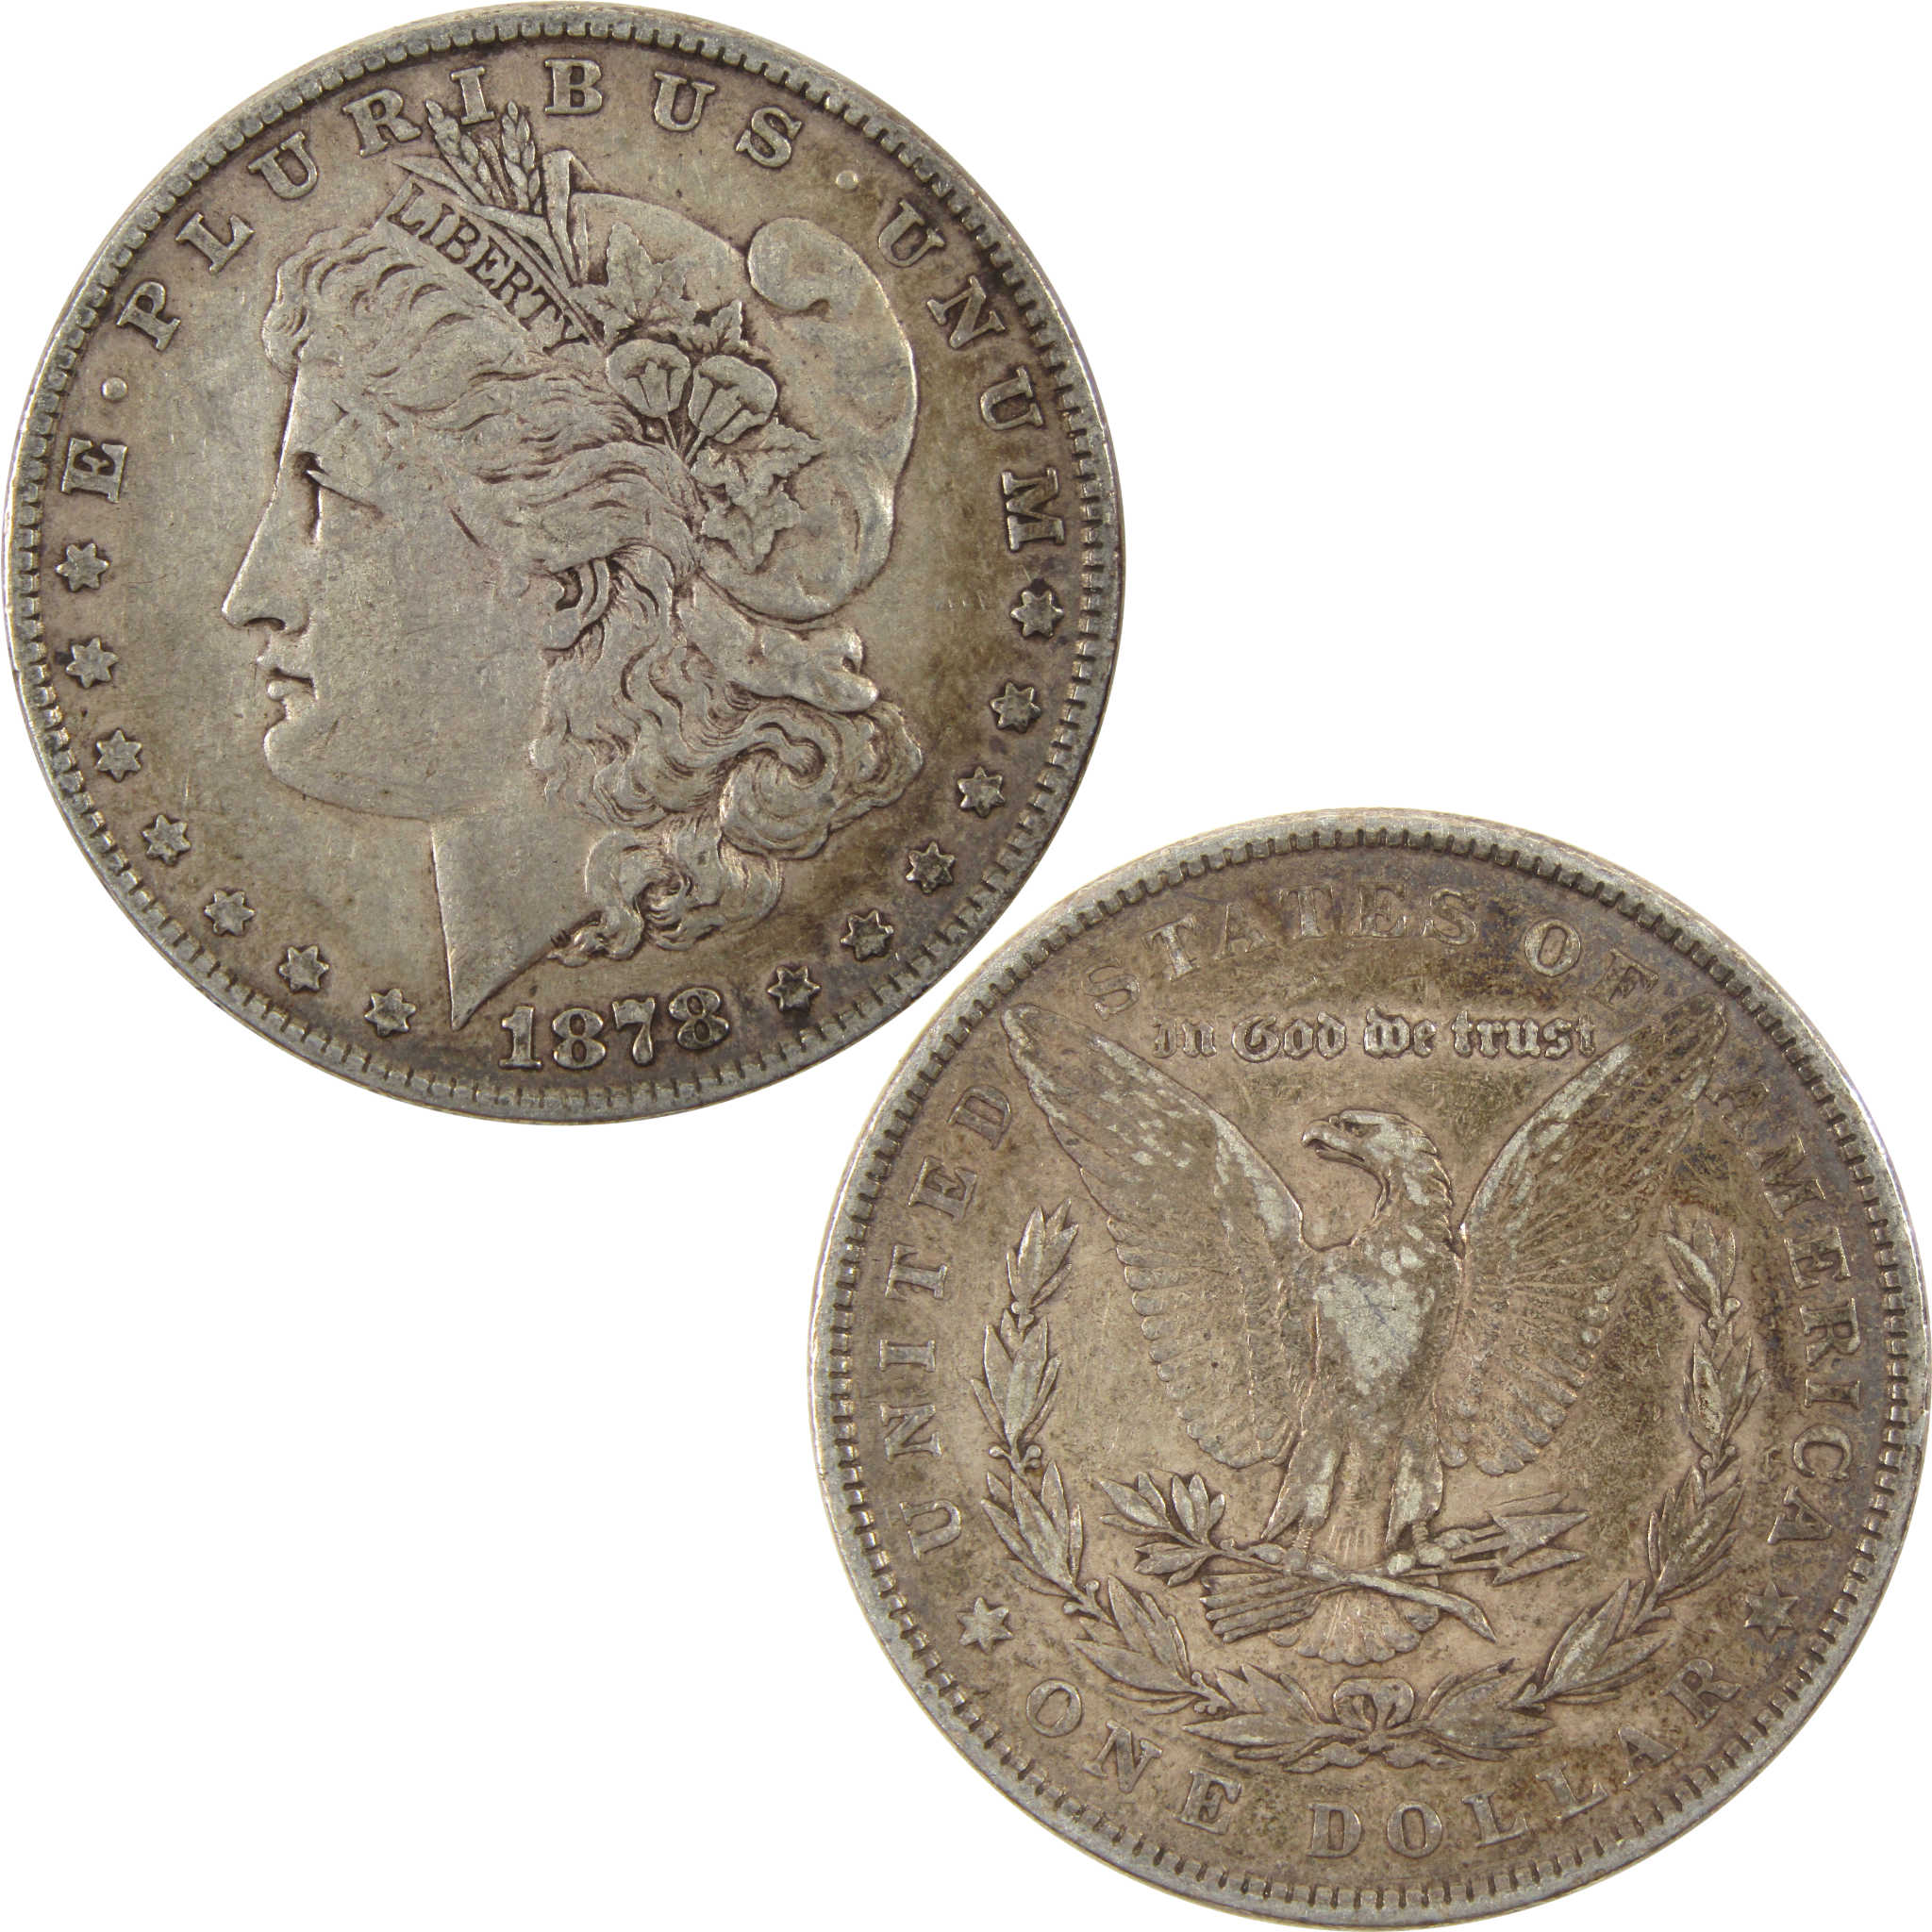 1878 7TF Rev 79 Morgan Dollar VF Very Fine Silver $1 Coin SKU:I9158 - Morgan coin - Morgan silver dollar - Morgan silver dollar for sale - Profile Coins &amp; Collectibles